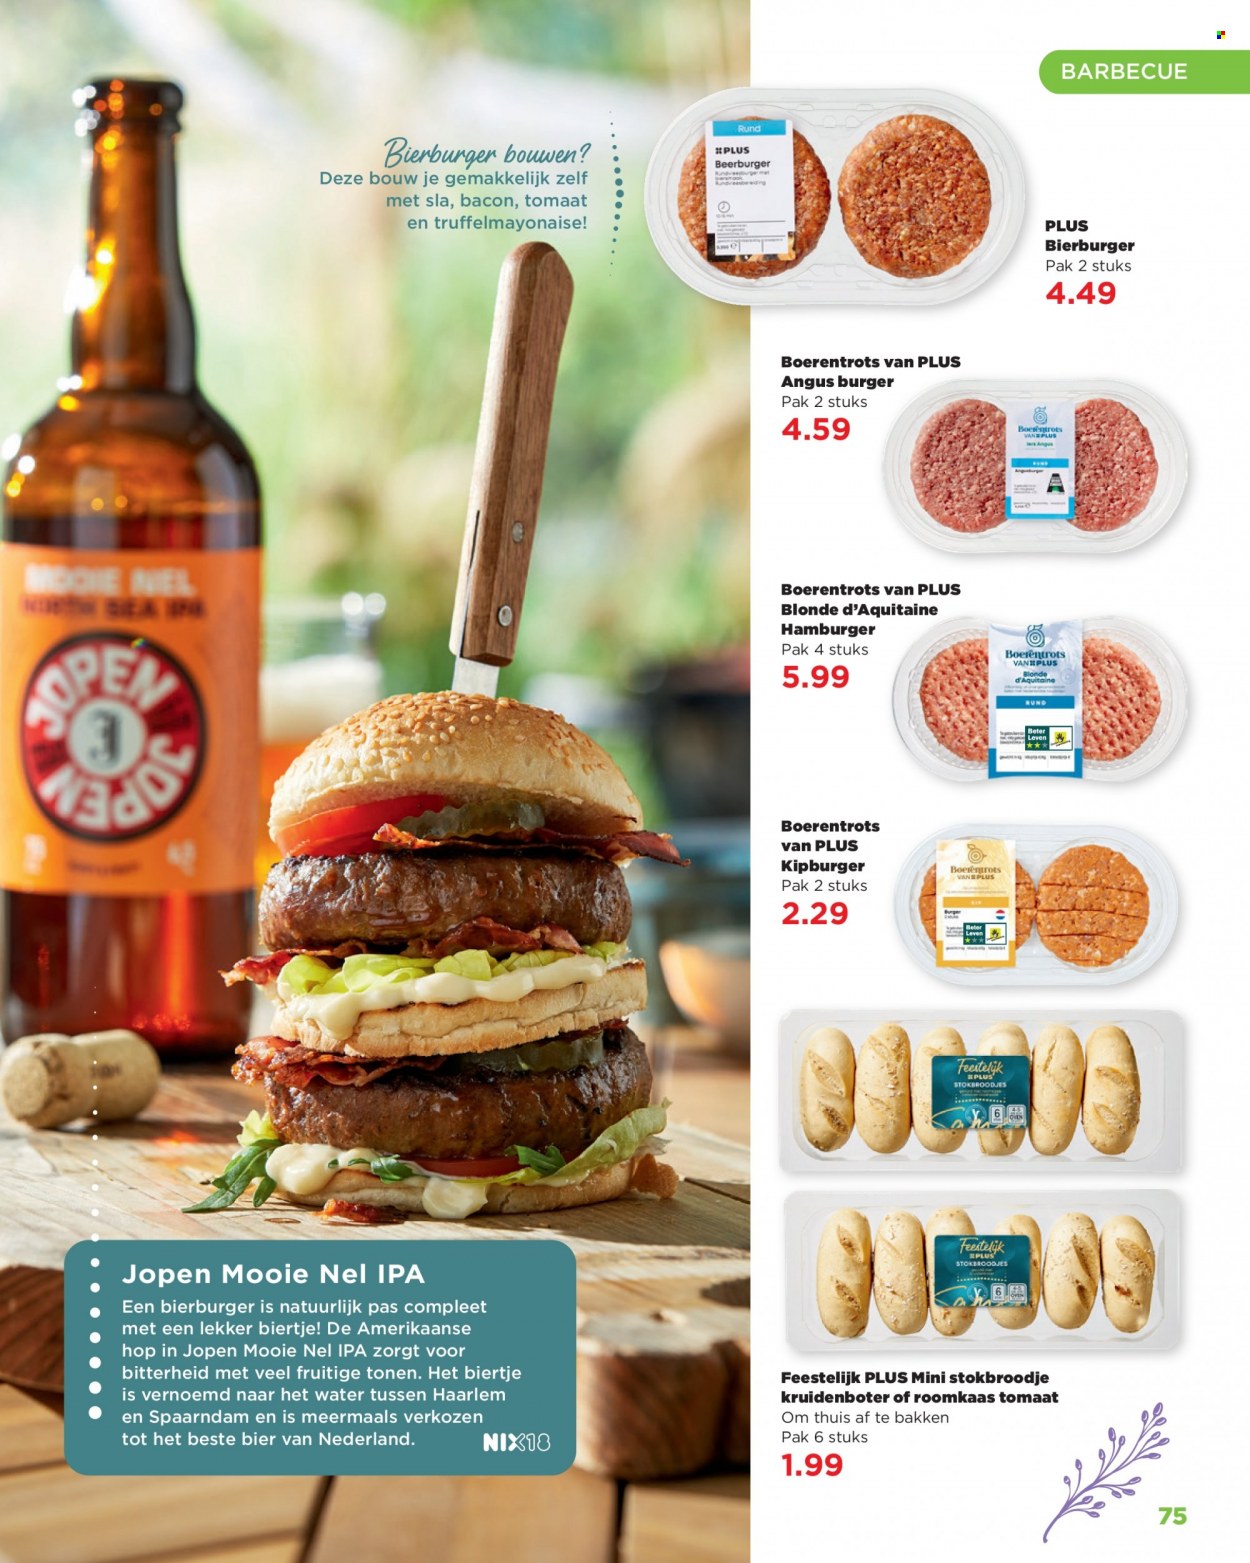 Plus-aanbieding -  producten in de aanbieding - bier, IPA, sla, hamburger, angusburgers, bacon, roomkaas, kruidenboter, BBQ. Pagina 75.